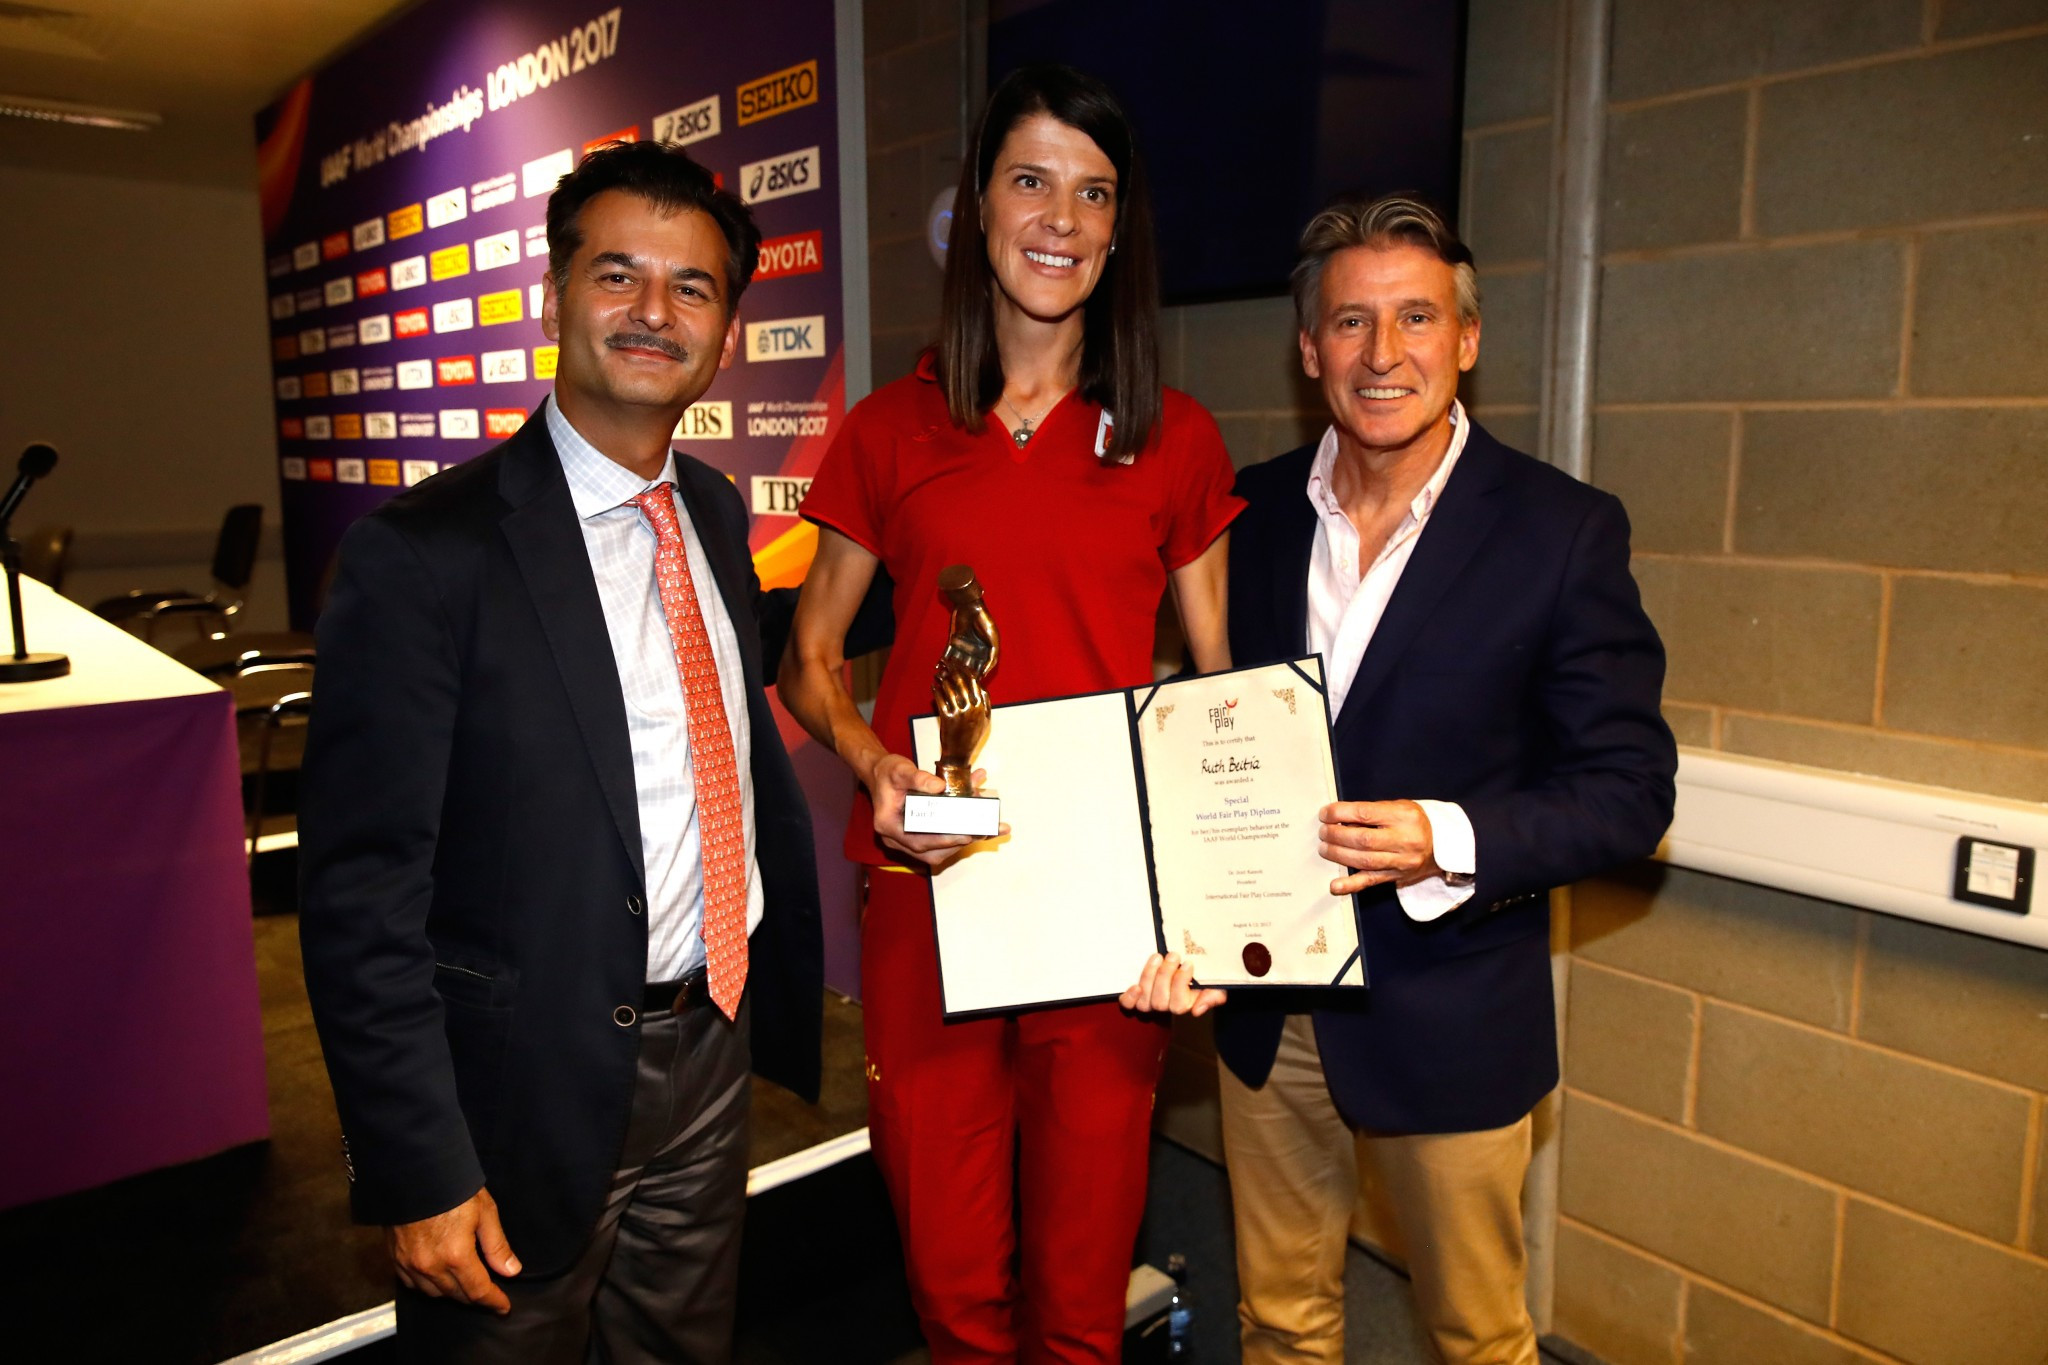 Olympic champion Beitia receives fair play award at IAAF World Championships